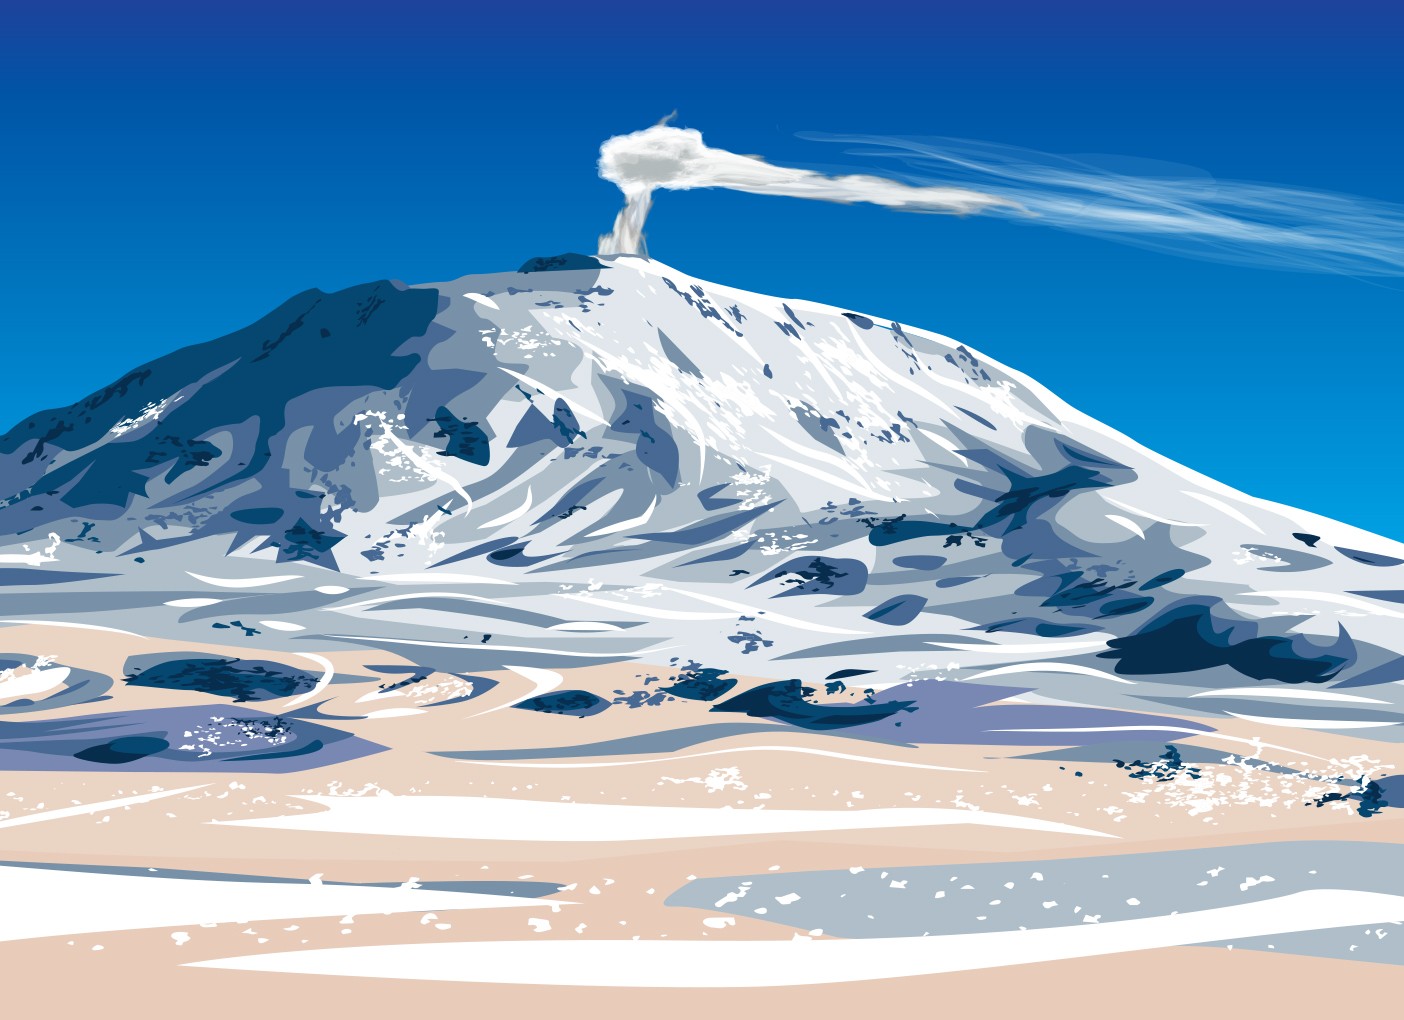 Mount Erebus